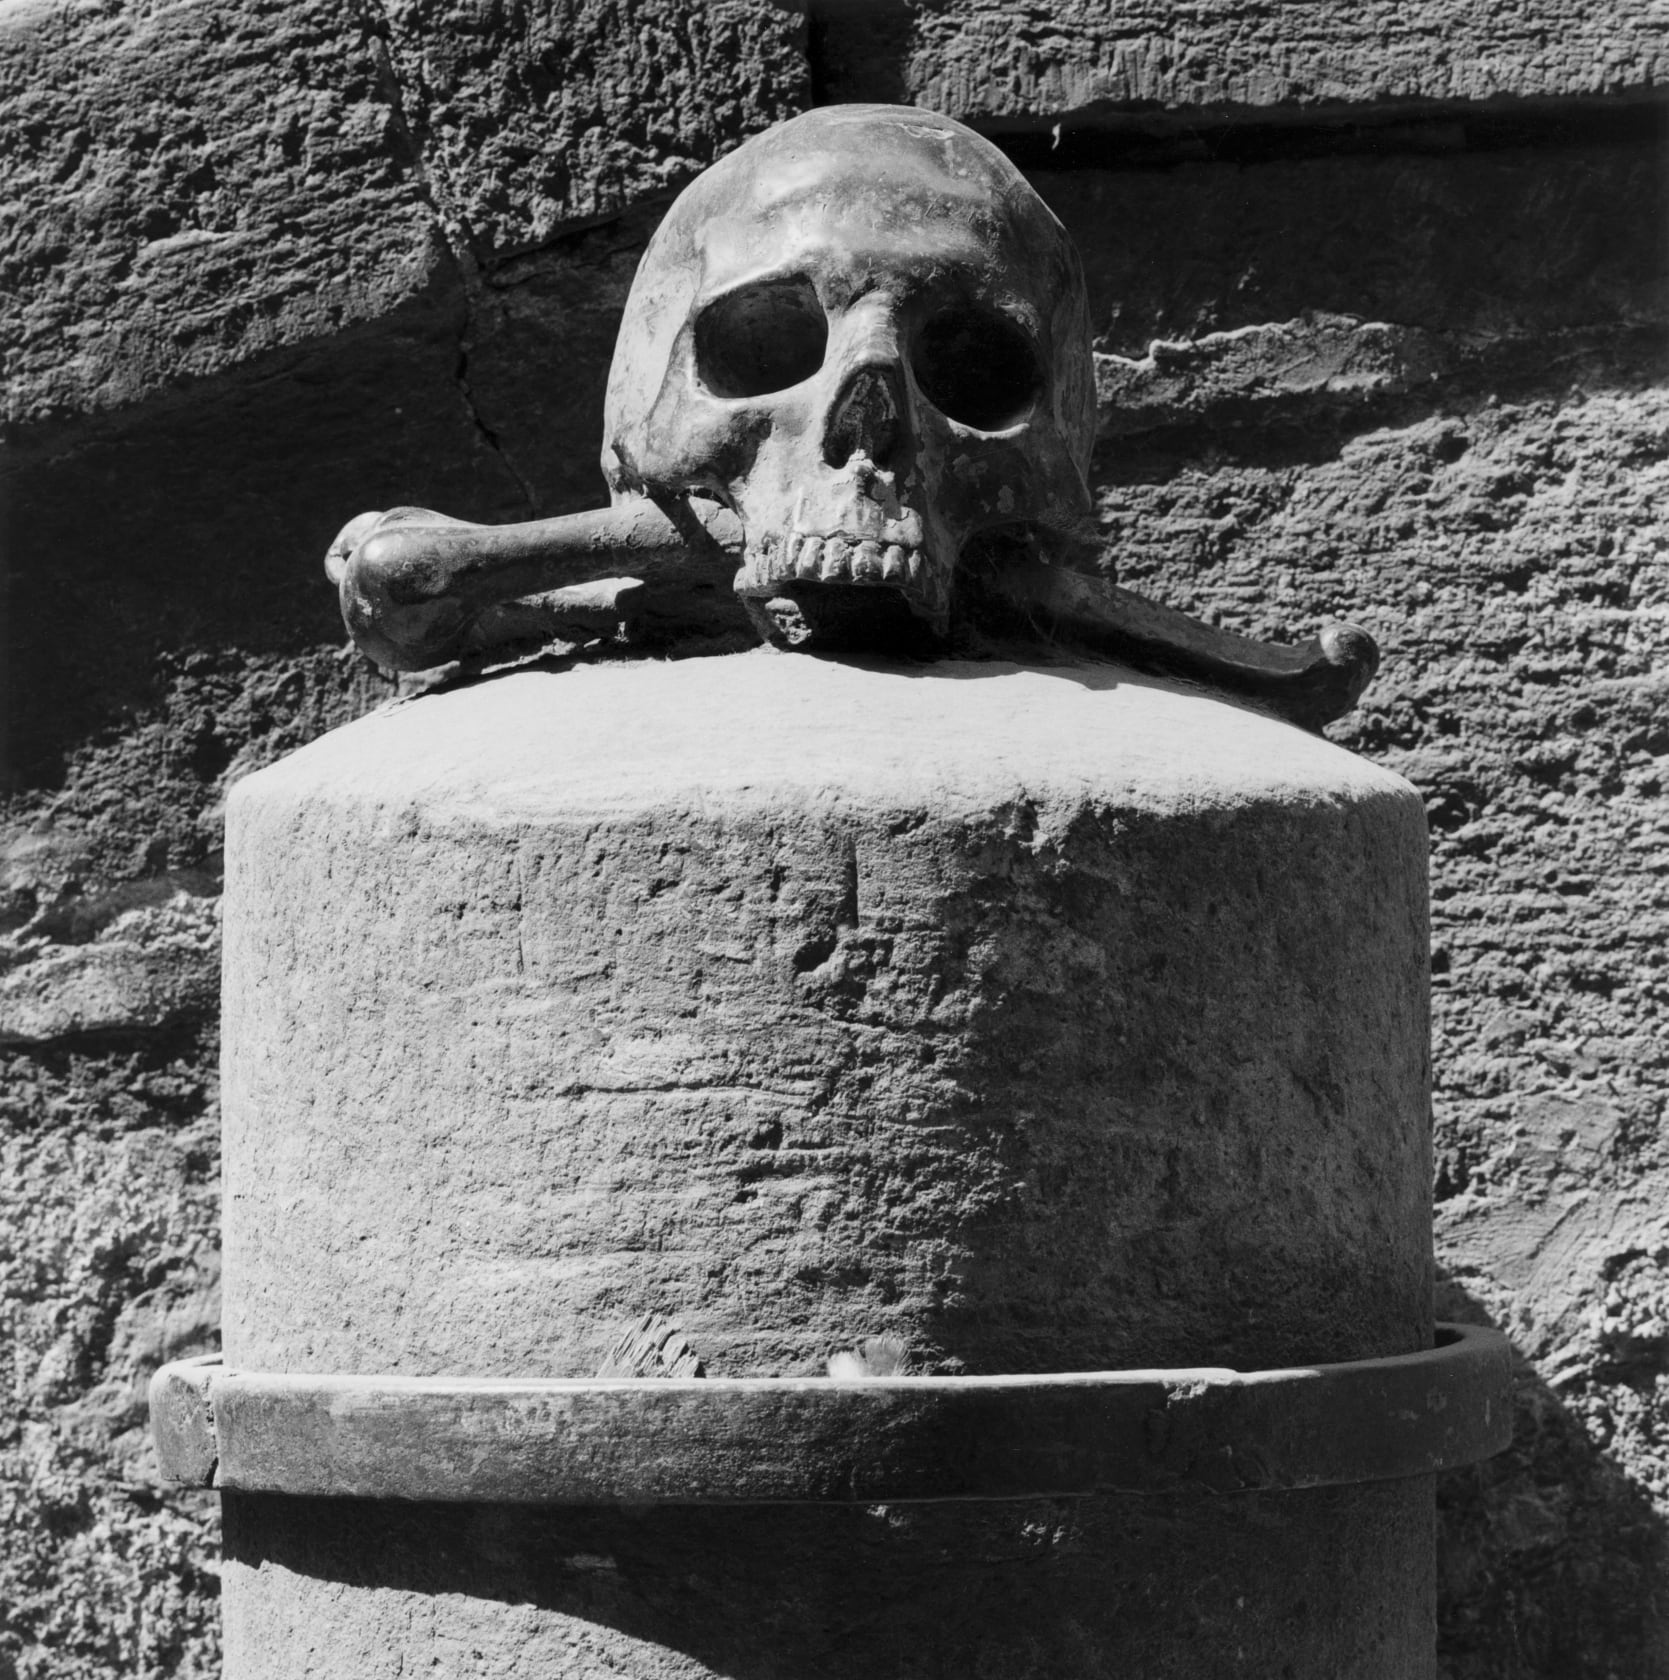 Robert Mapplethorpe Foundation, Skull and Crossbones, 1983